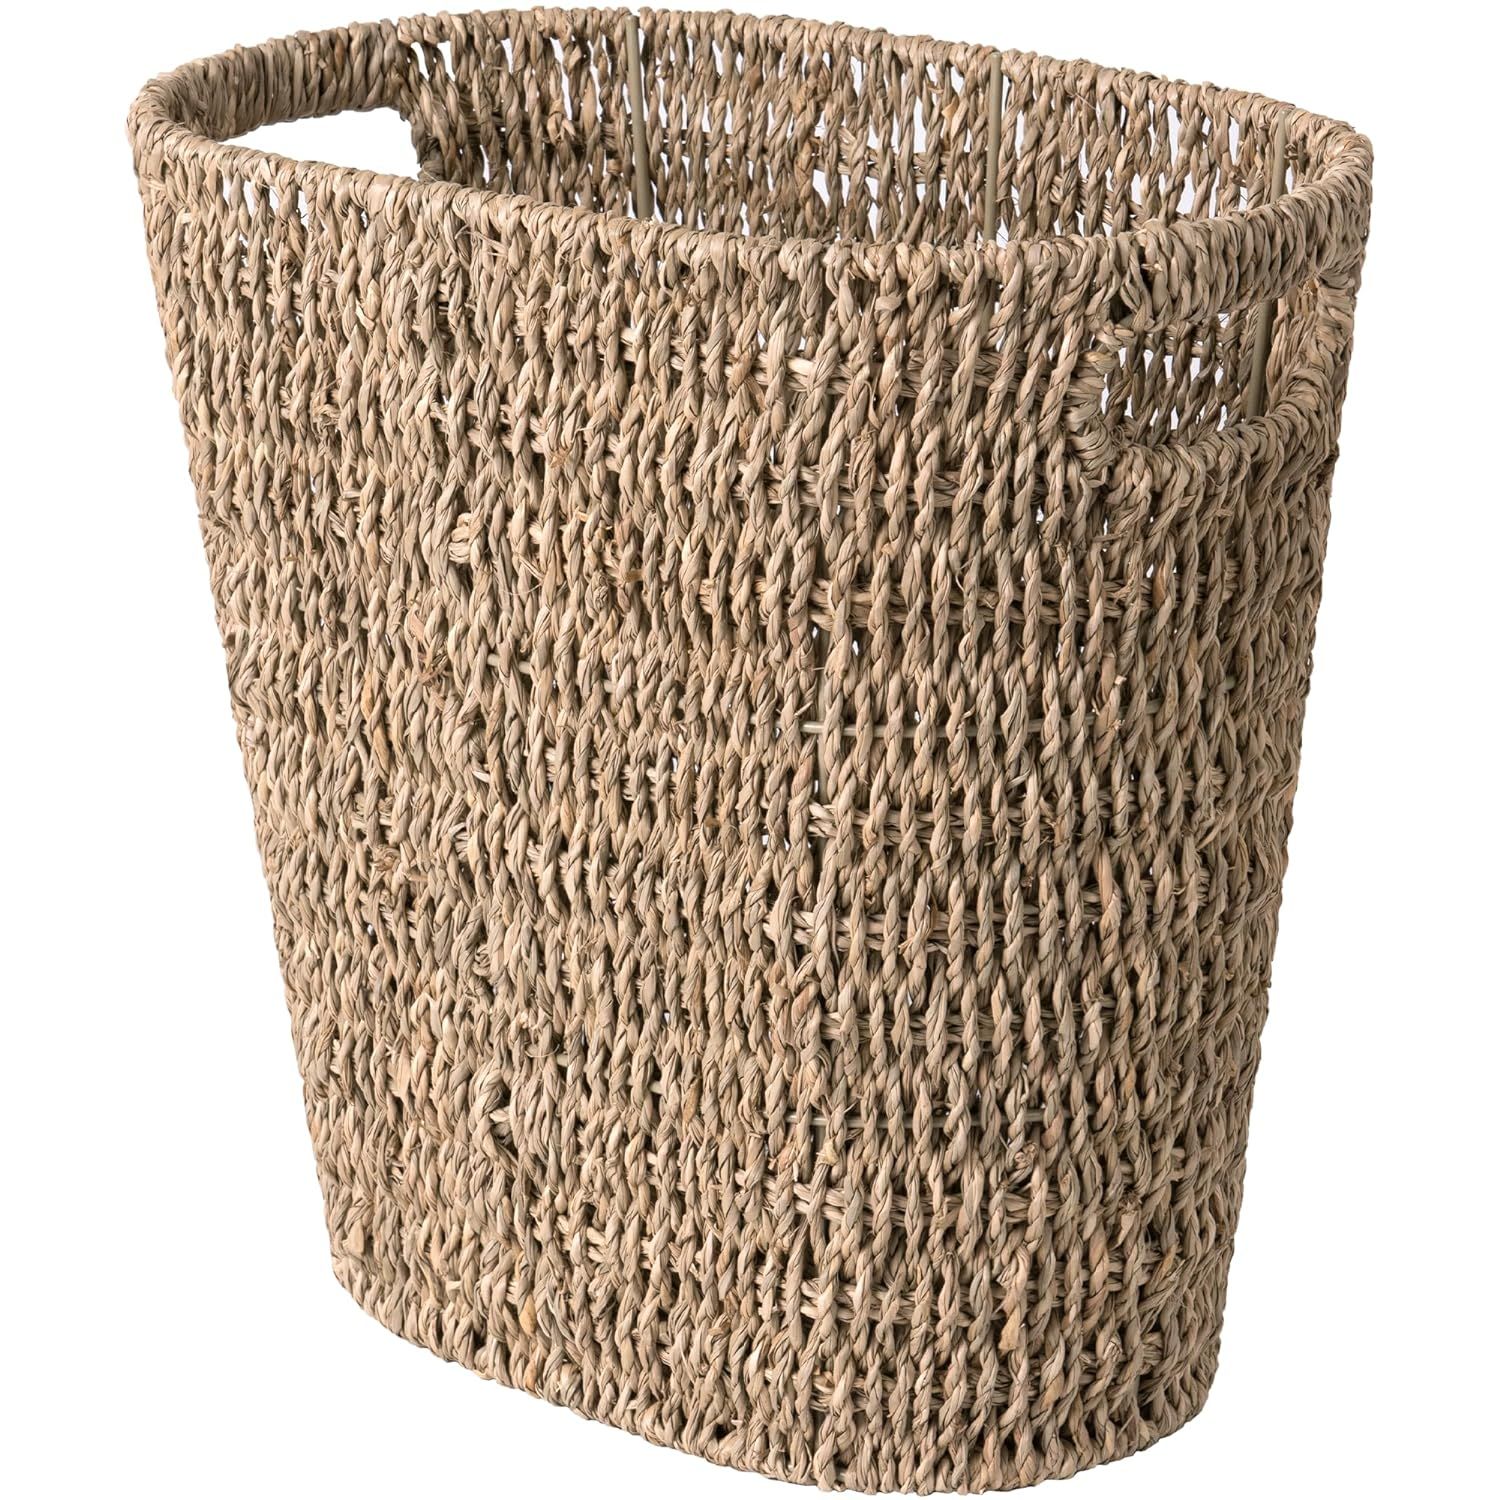 StorageWorks Wicker Waste Basket, Wicker Trash Basket with Built-in Handles, Handwoven Seagrass T... | Amazon (US)